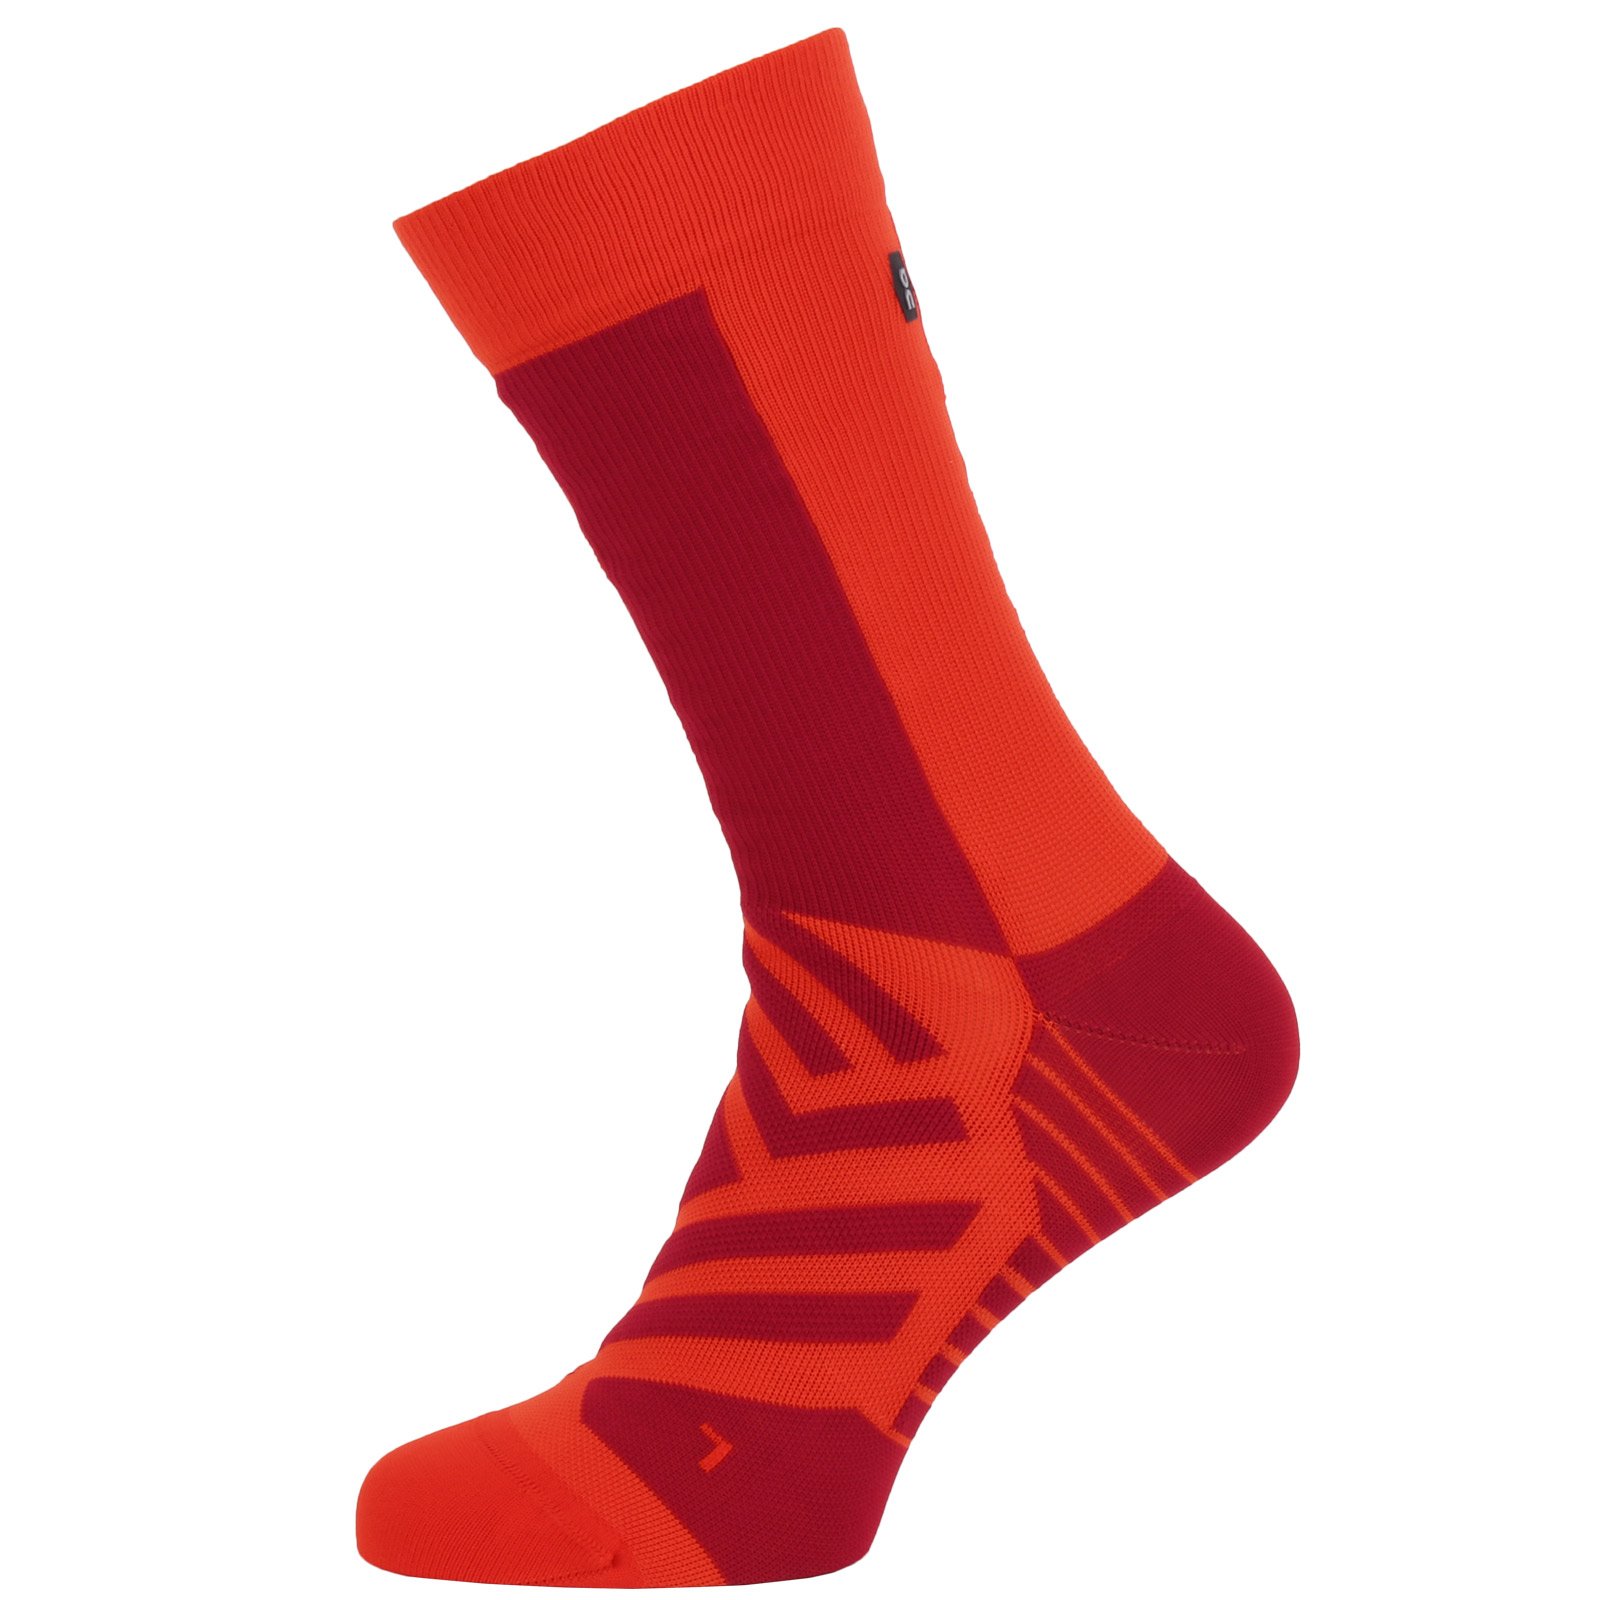 Productfoto van On Performance High Sock Hardloopsokken - Chili &amp; Spice